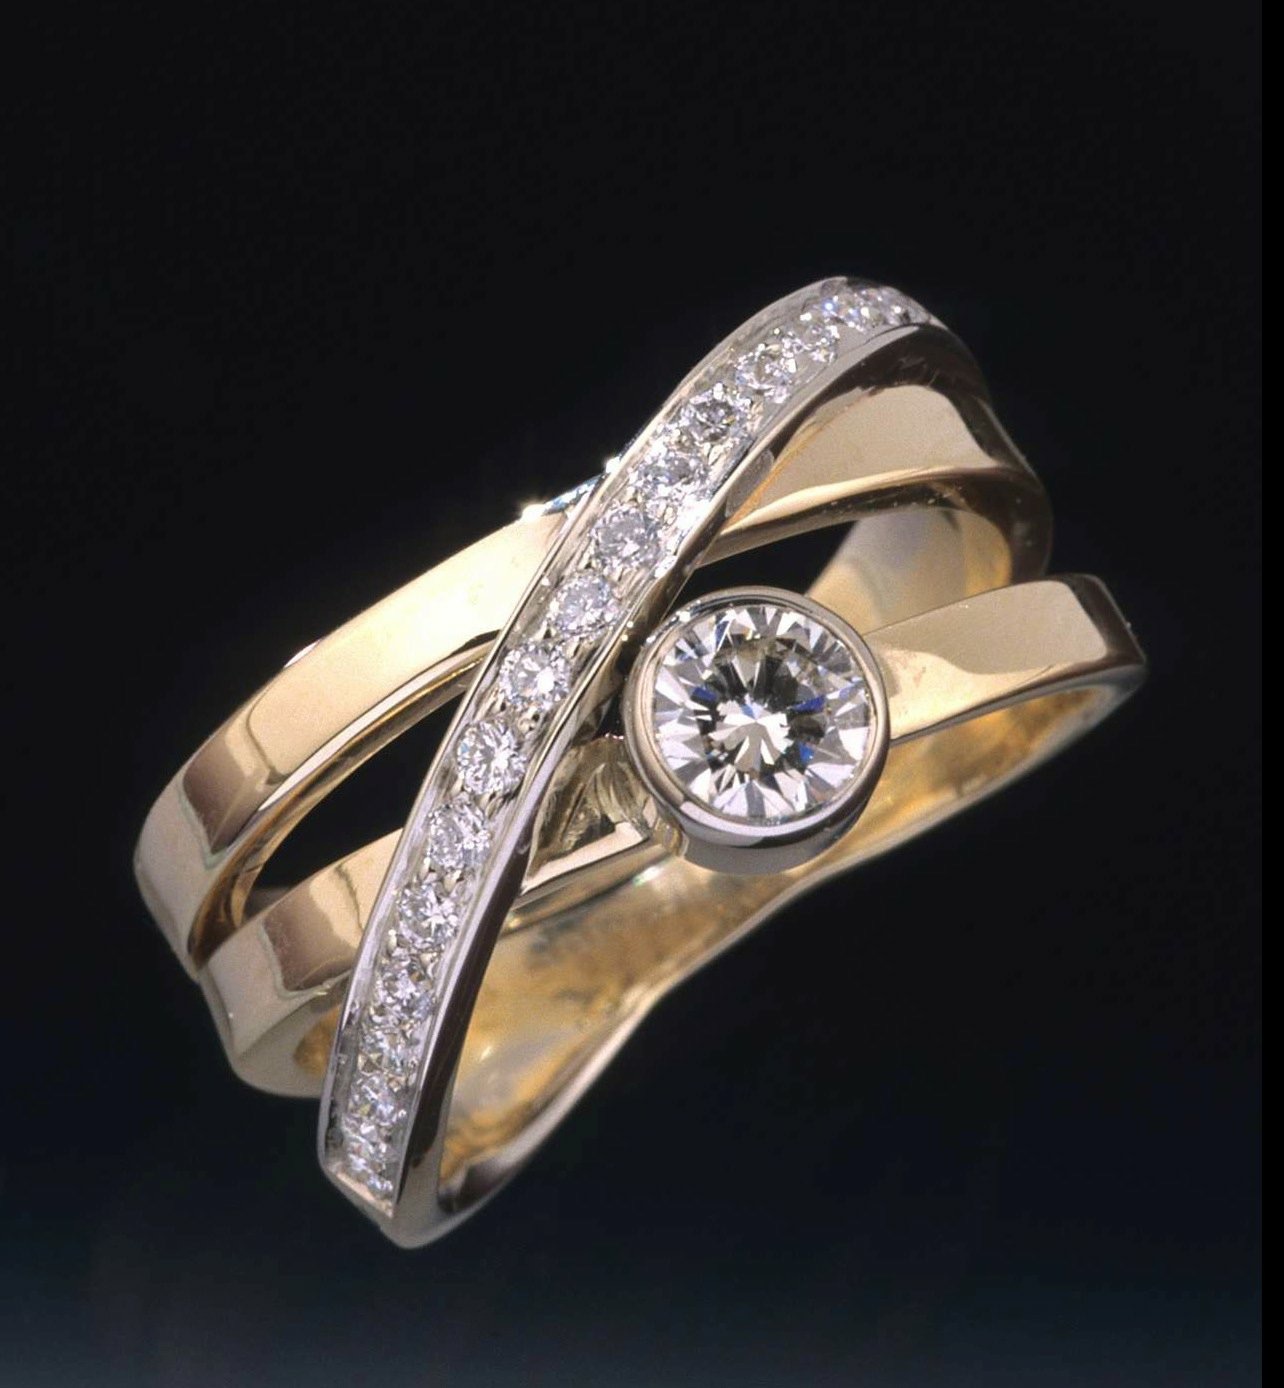 M. Grosser Jewelry Design | Custom Jewelry | Carmel IN